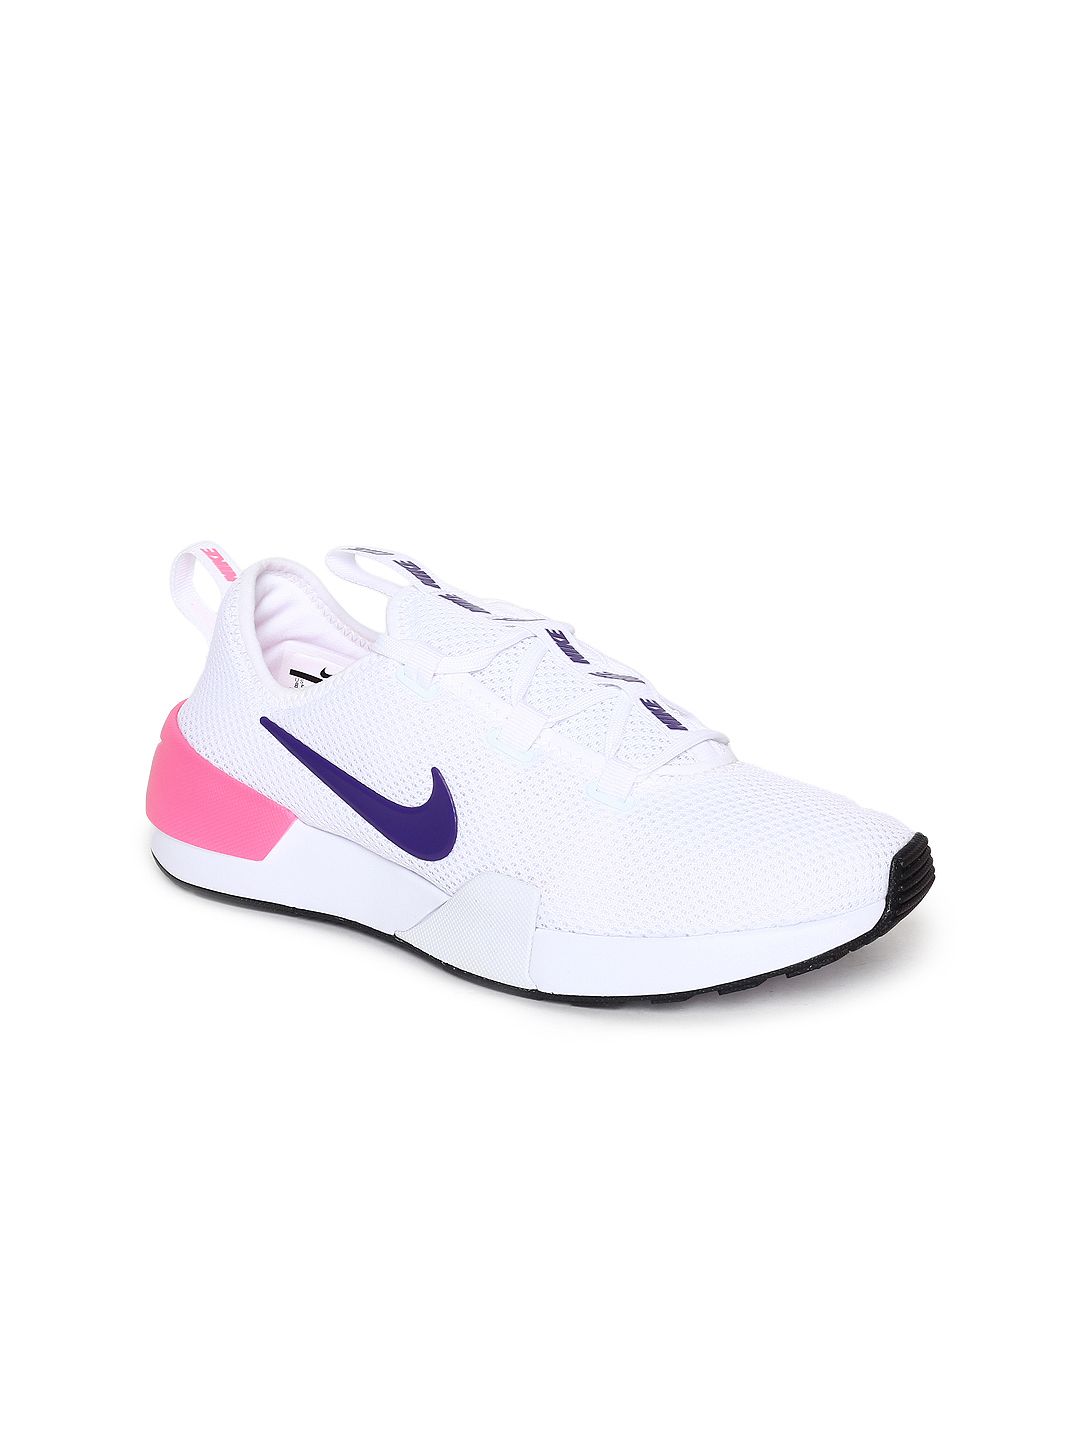 Nike Women ASHIN MODERN White Running Shoes Price in India